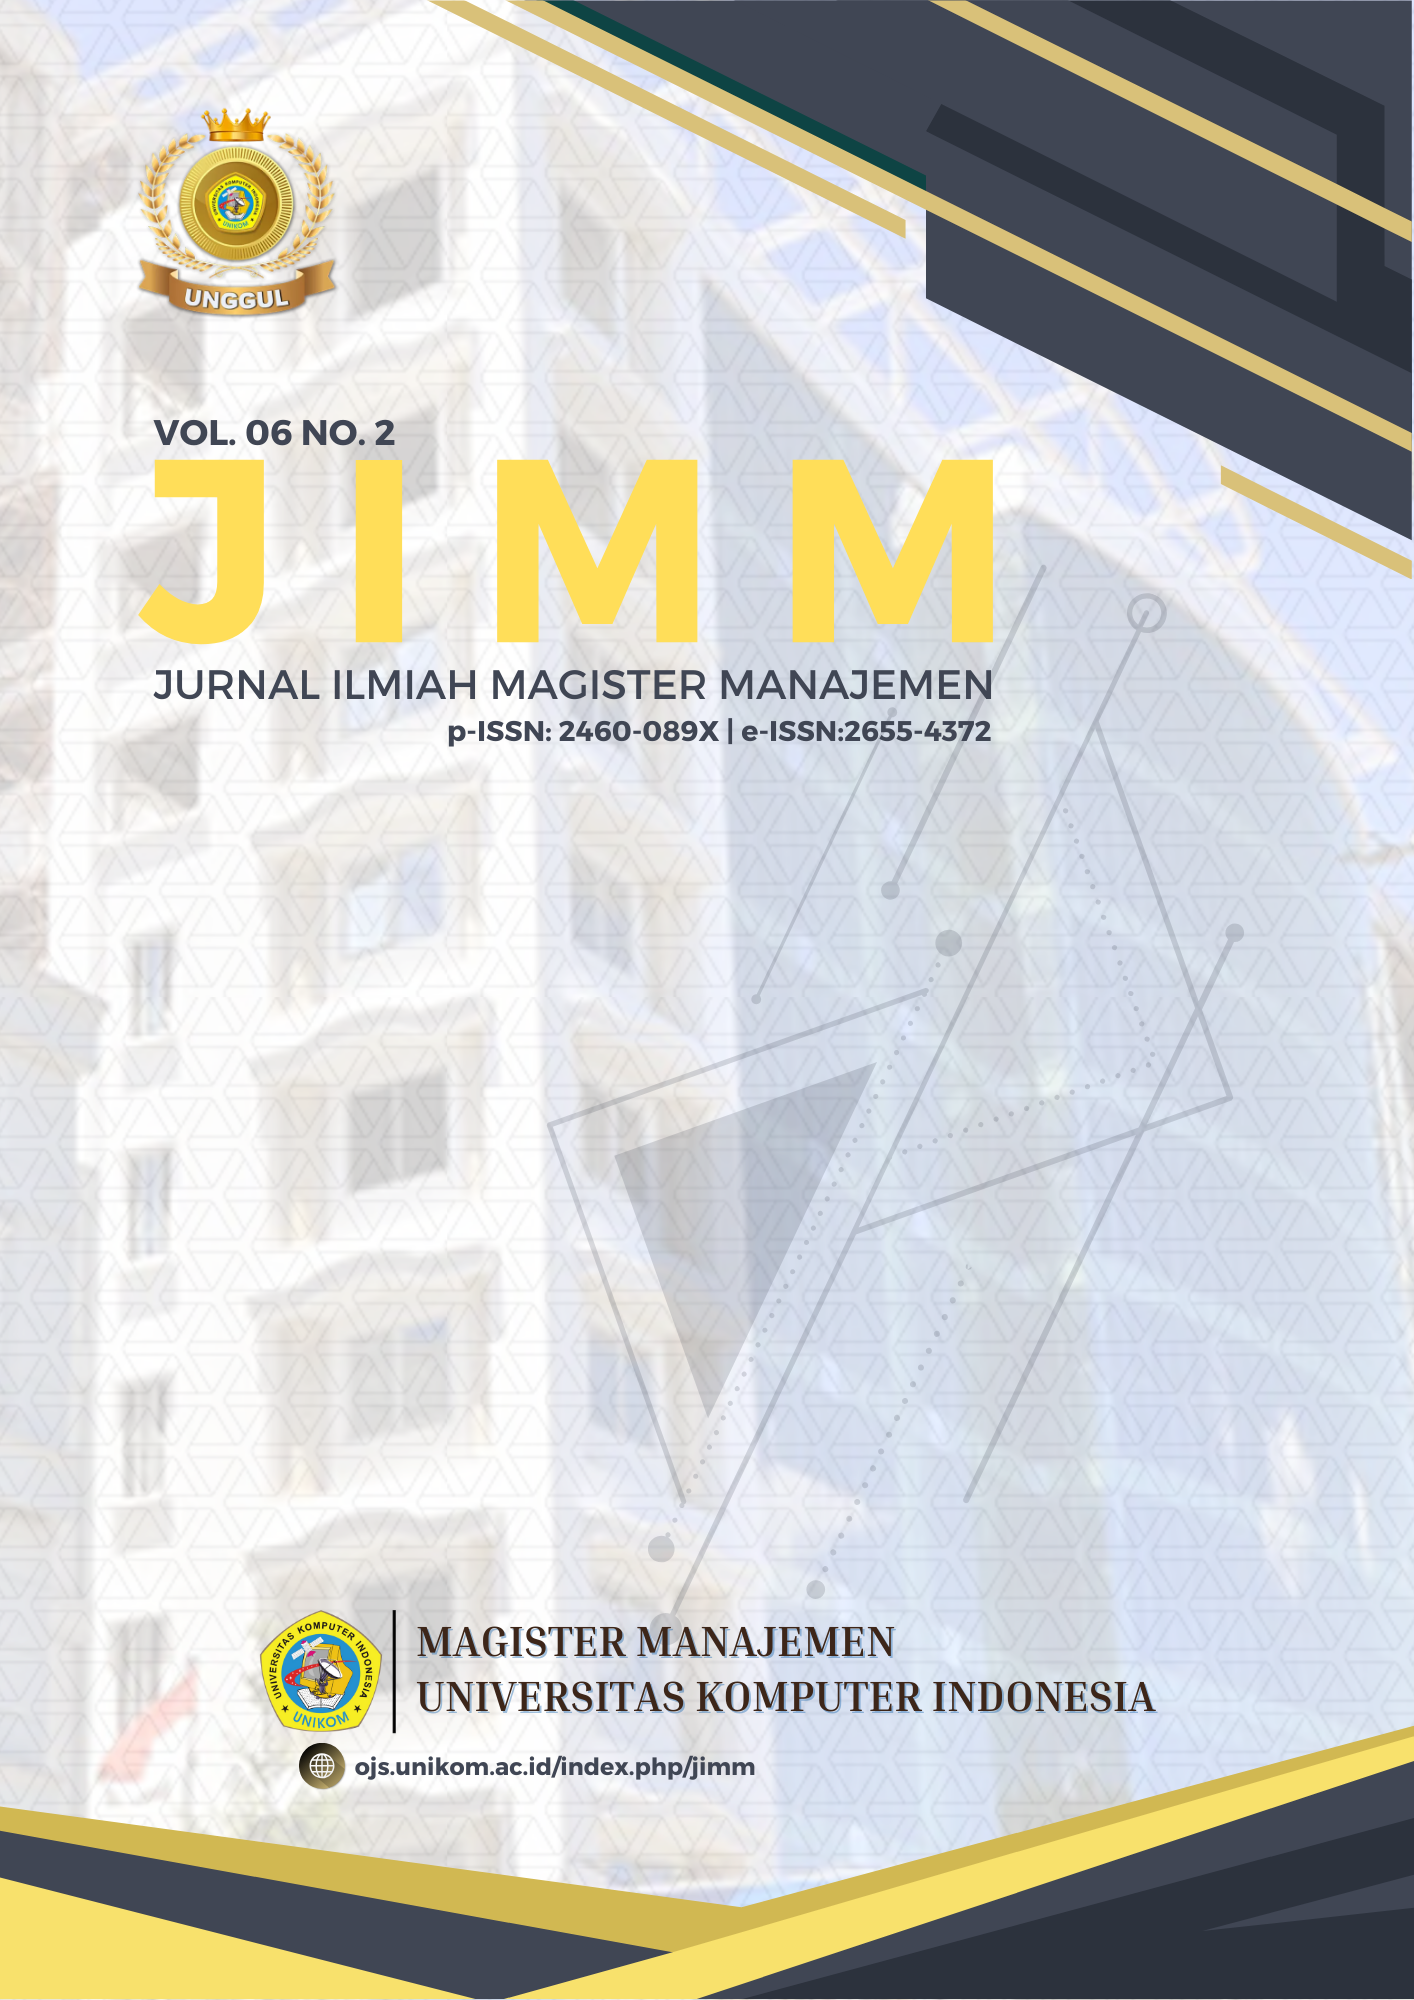 Jurnal Ilmiah Magister Manajemen (JIMM) UNIKOM Vol. 06 No. 2